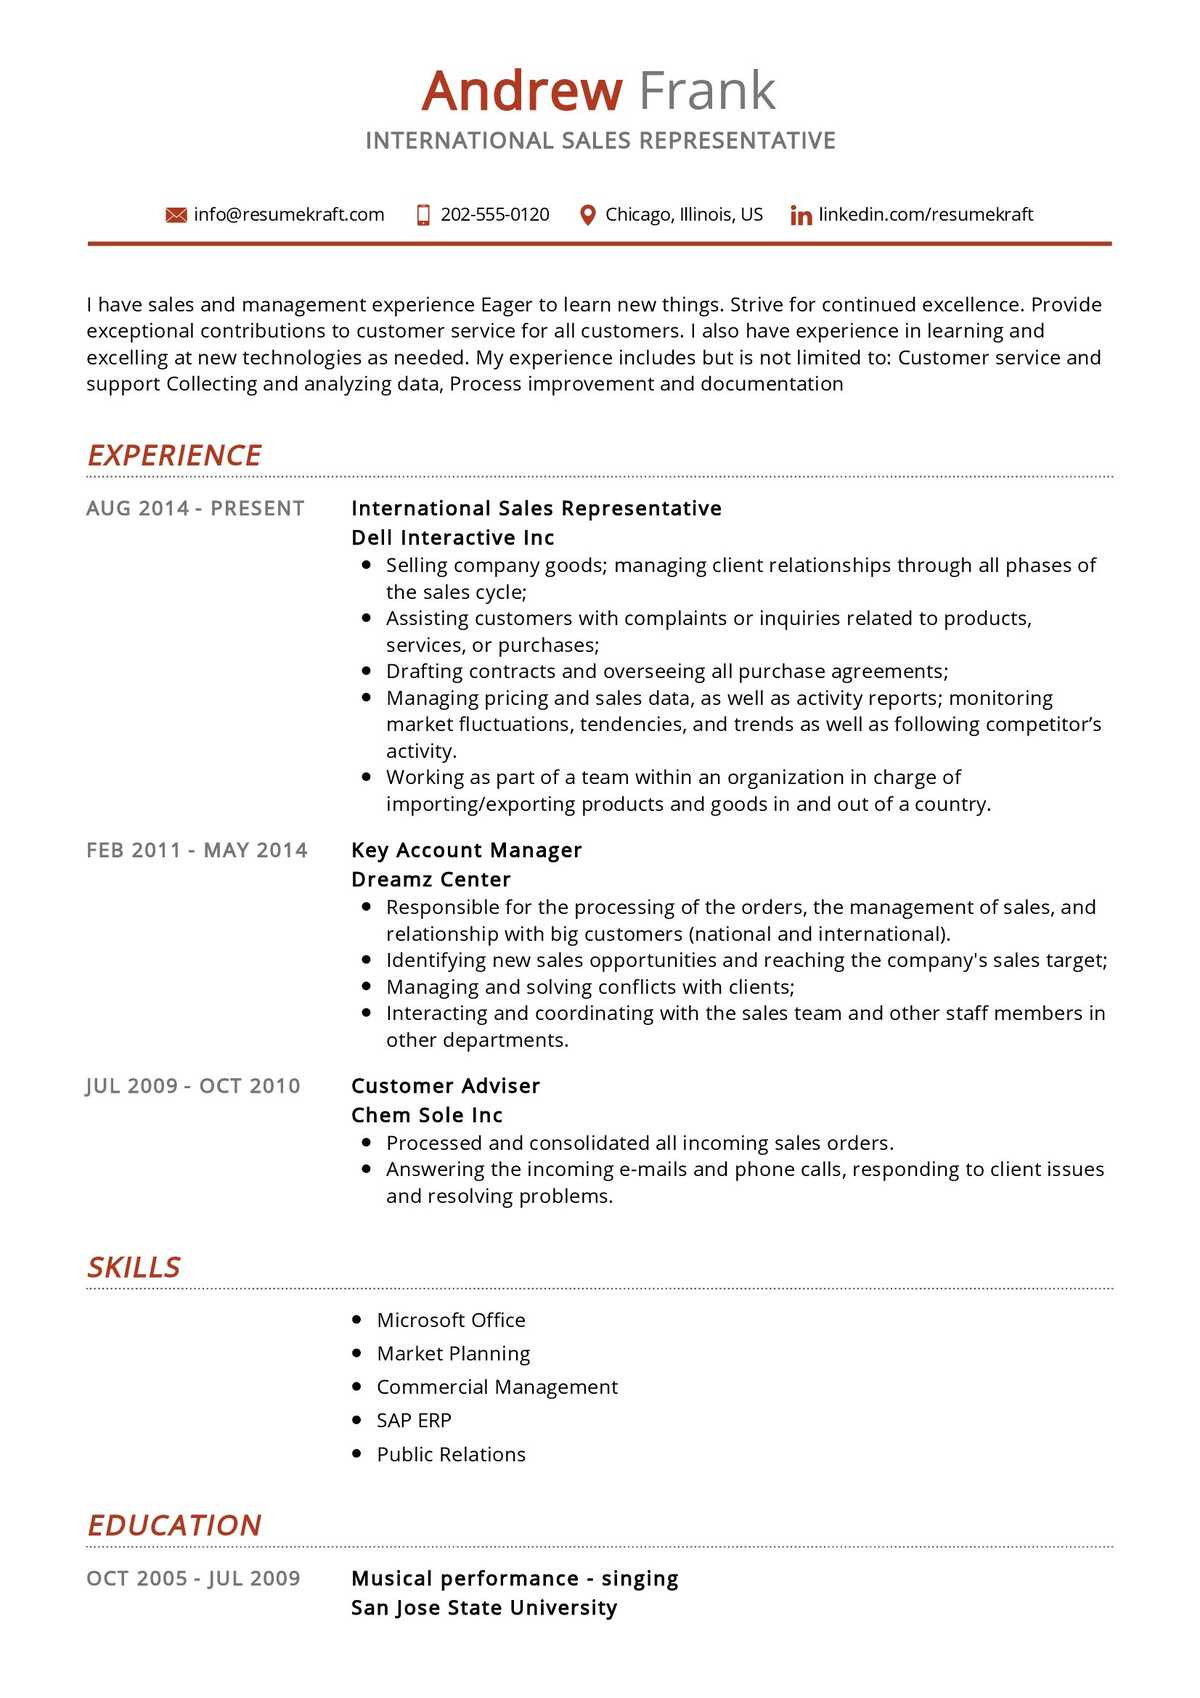 Sample Resume for Sales Representative with No Experience International Sales Representative Resume 2021 Writing Tips …